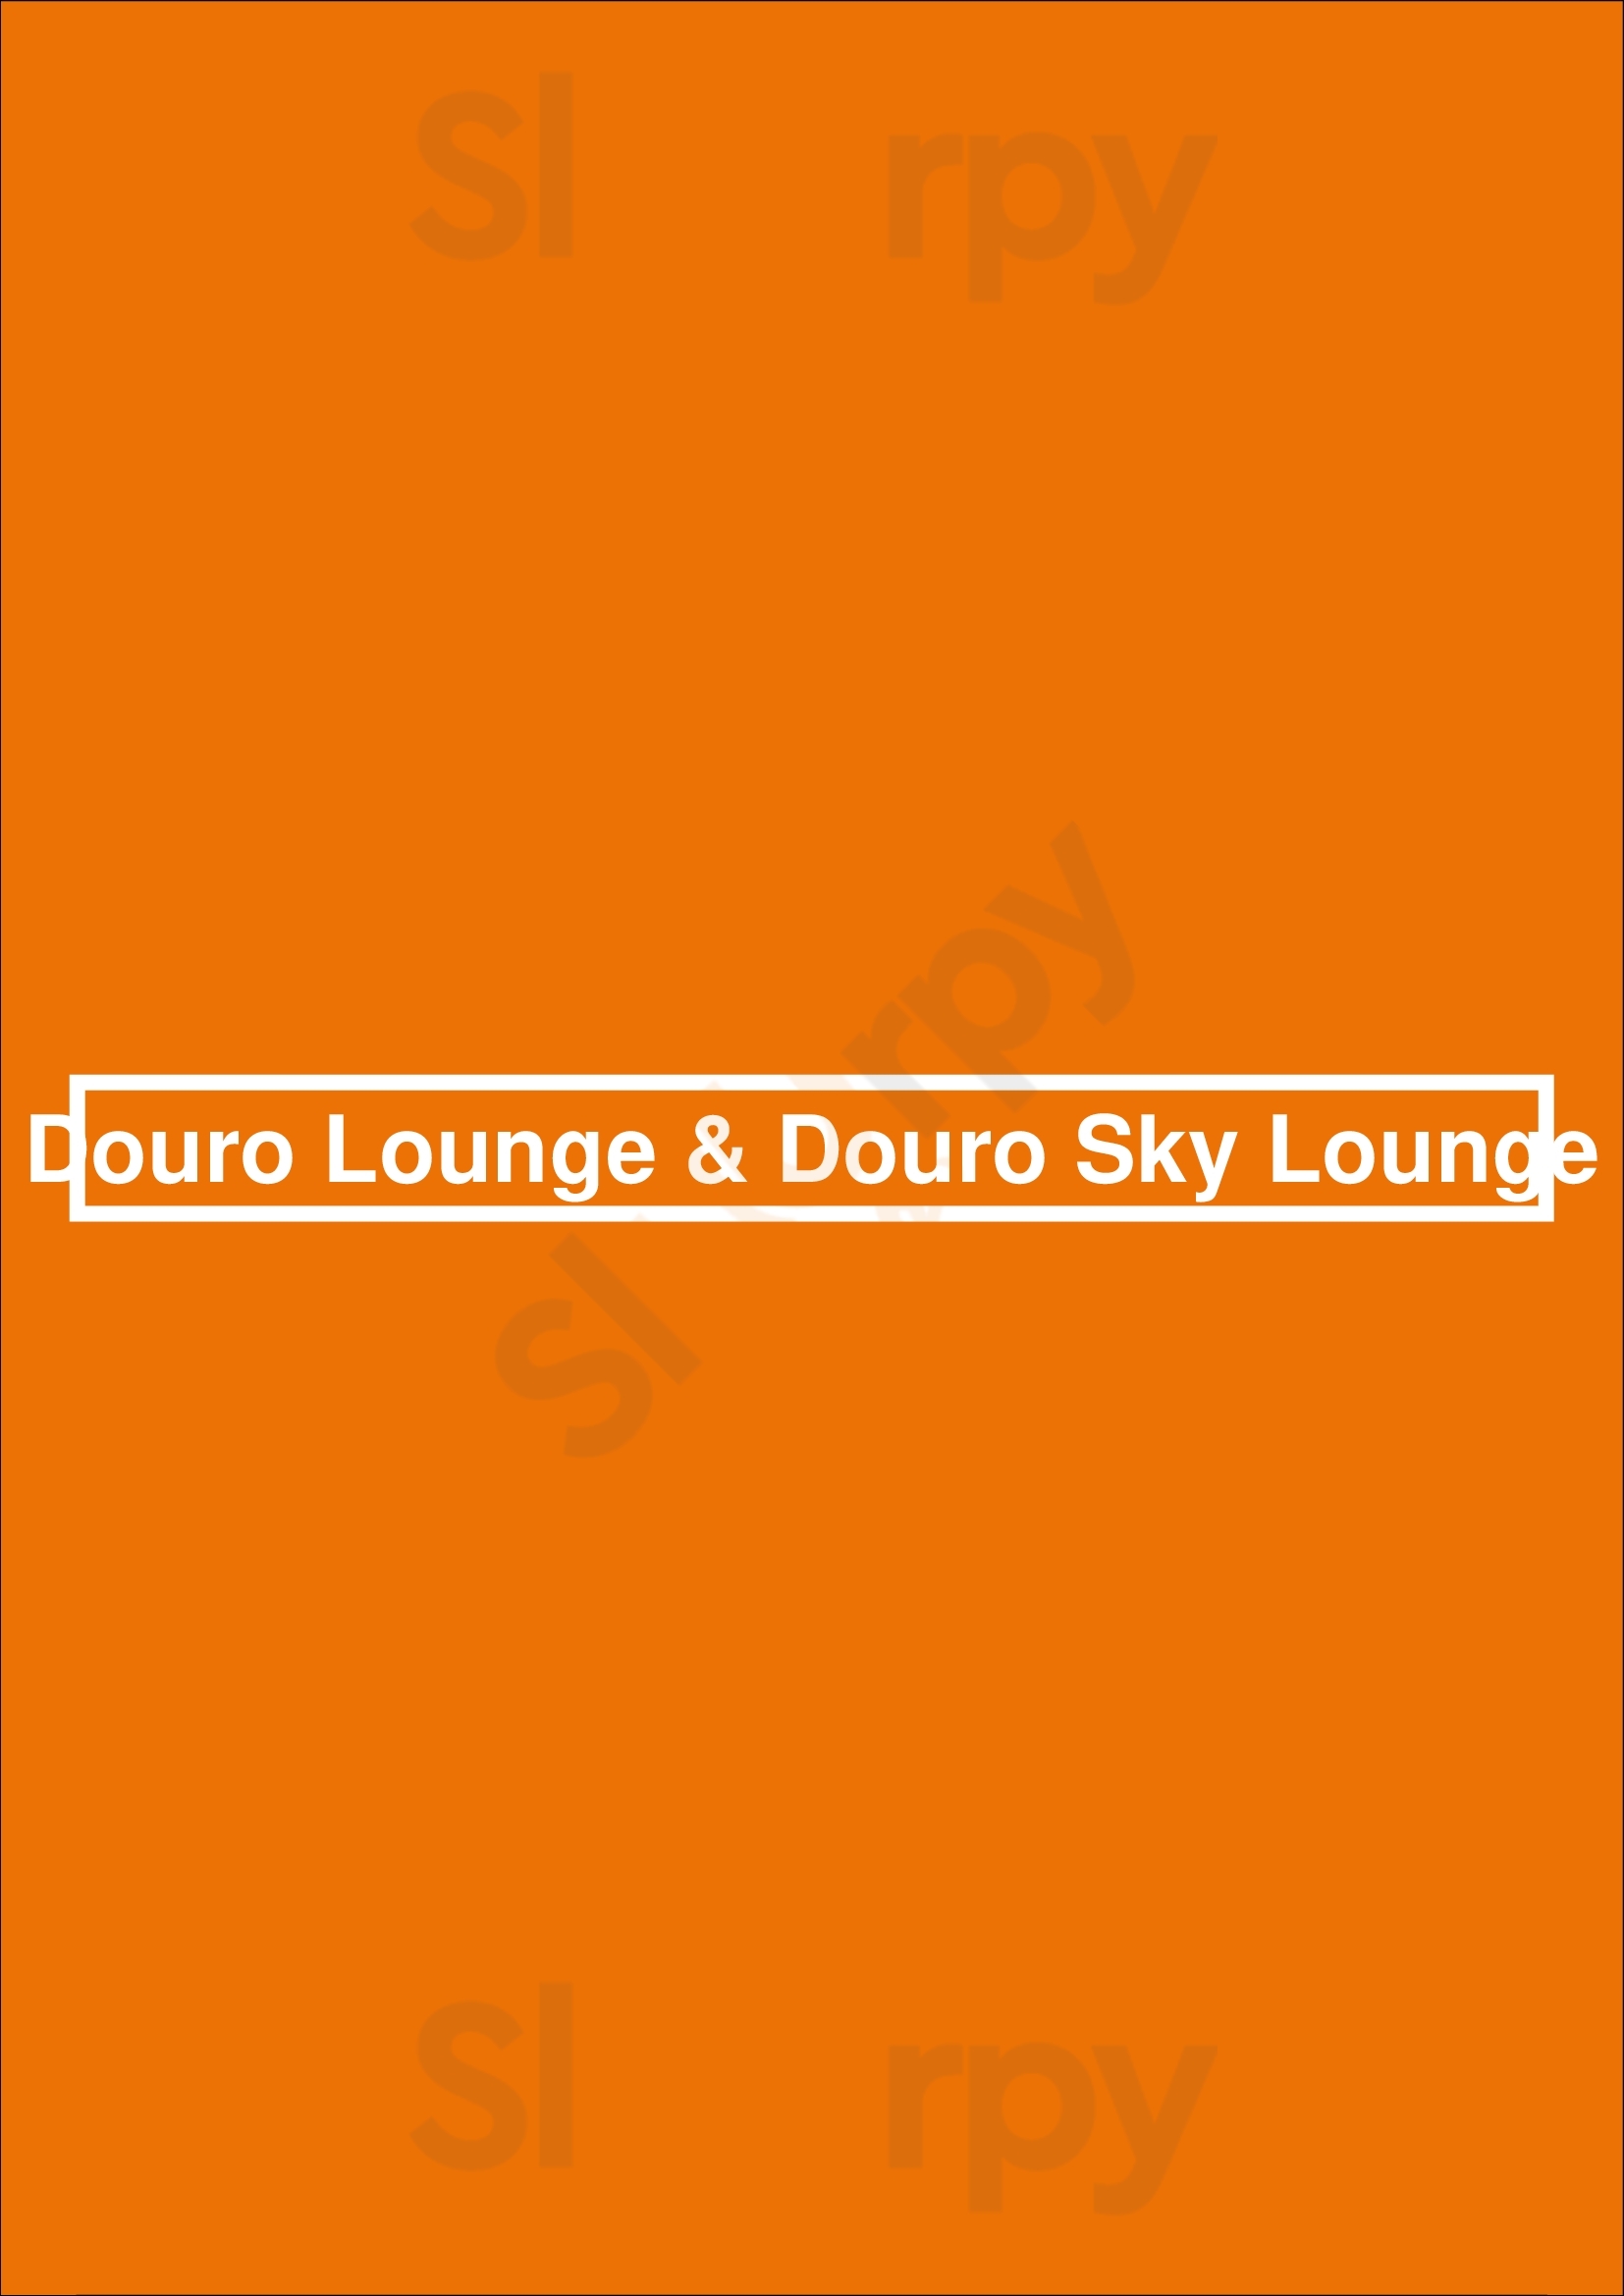 Douro Lounge & Douro Sky Lounge Porto Menu - 1